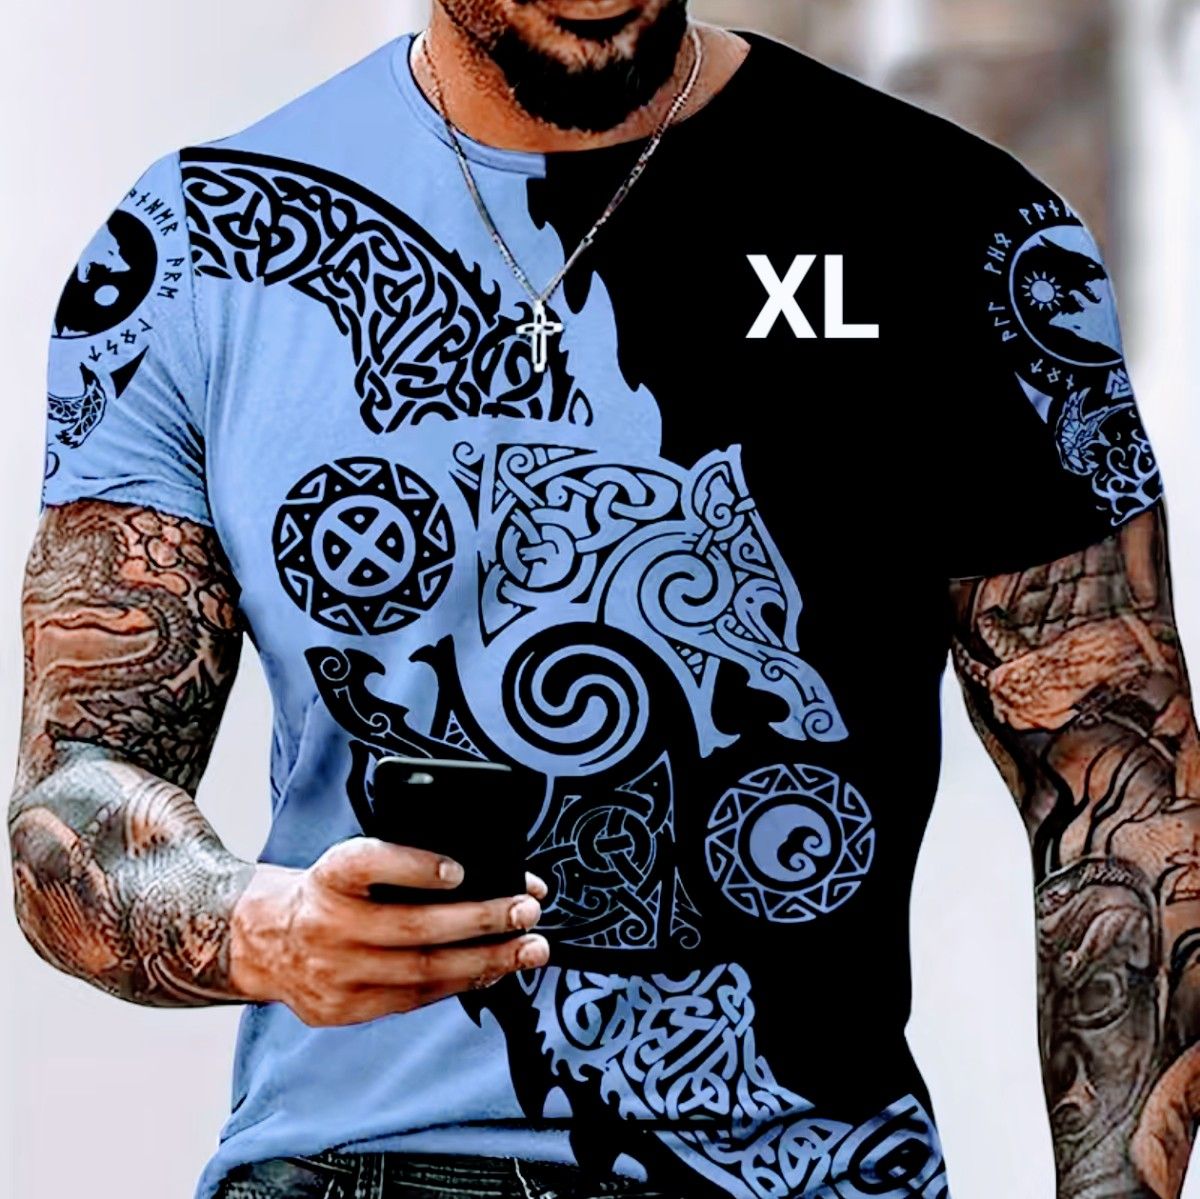 【SB】XL相当 新品 陰陽 ウルフ 両面 プリント Tシャツ ストレッチ メンズ